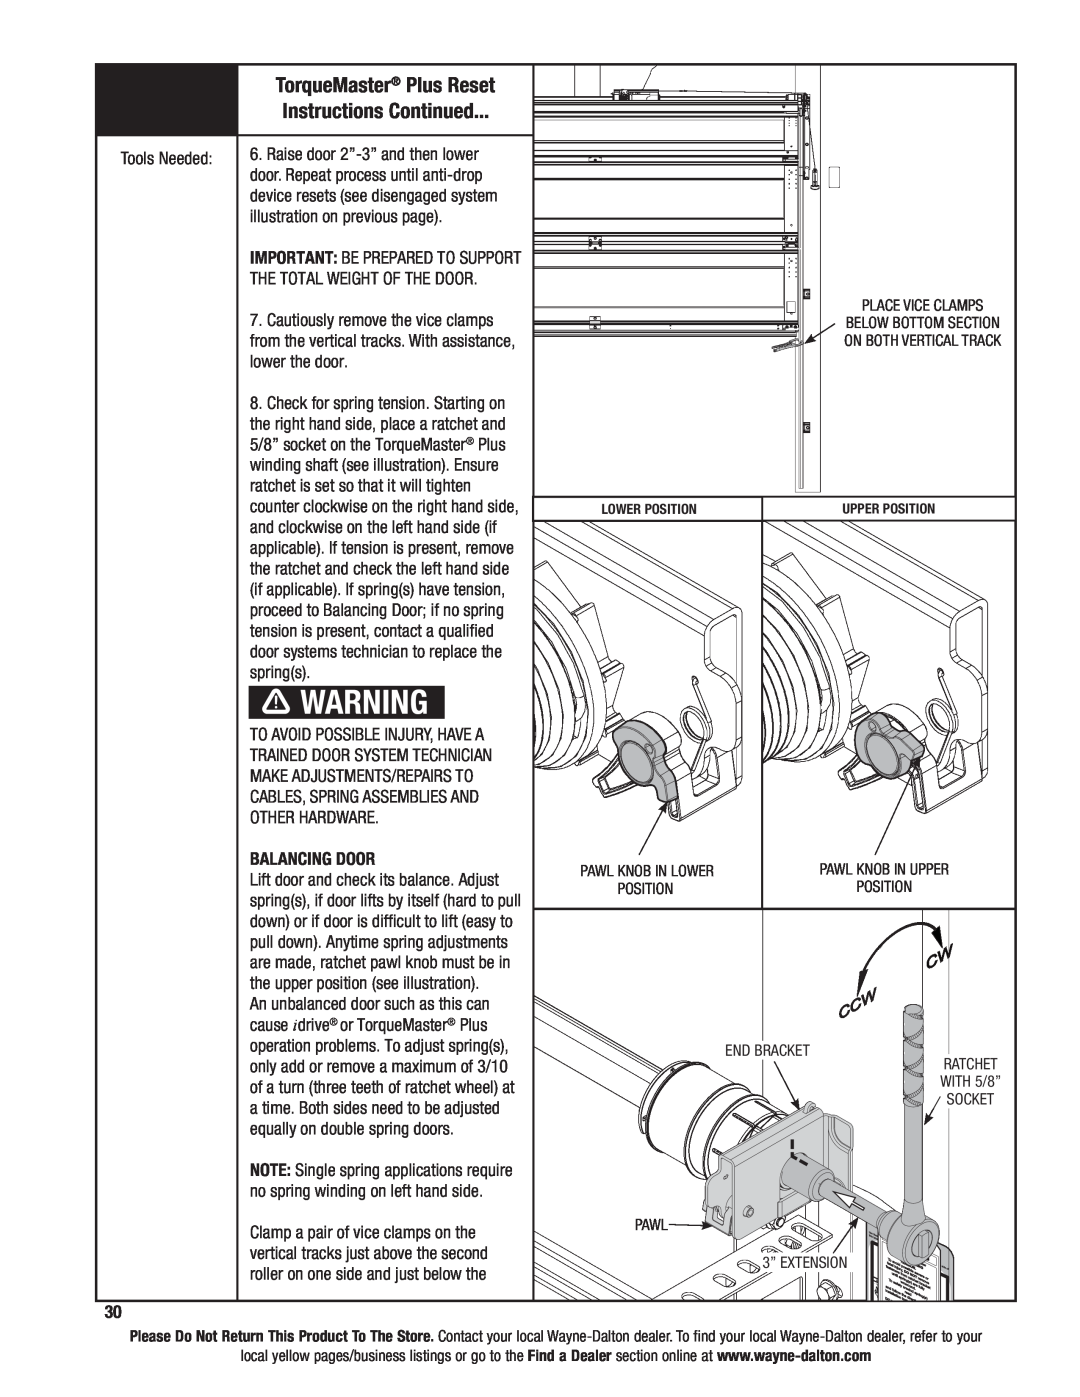 Wayne-Dalton 46 installation instructions Instructions Continued, TorqueMaster Plus Reset 